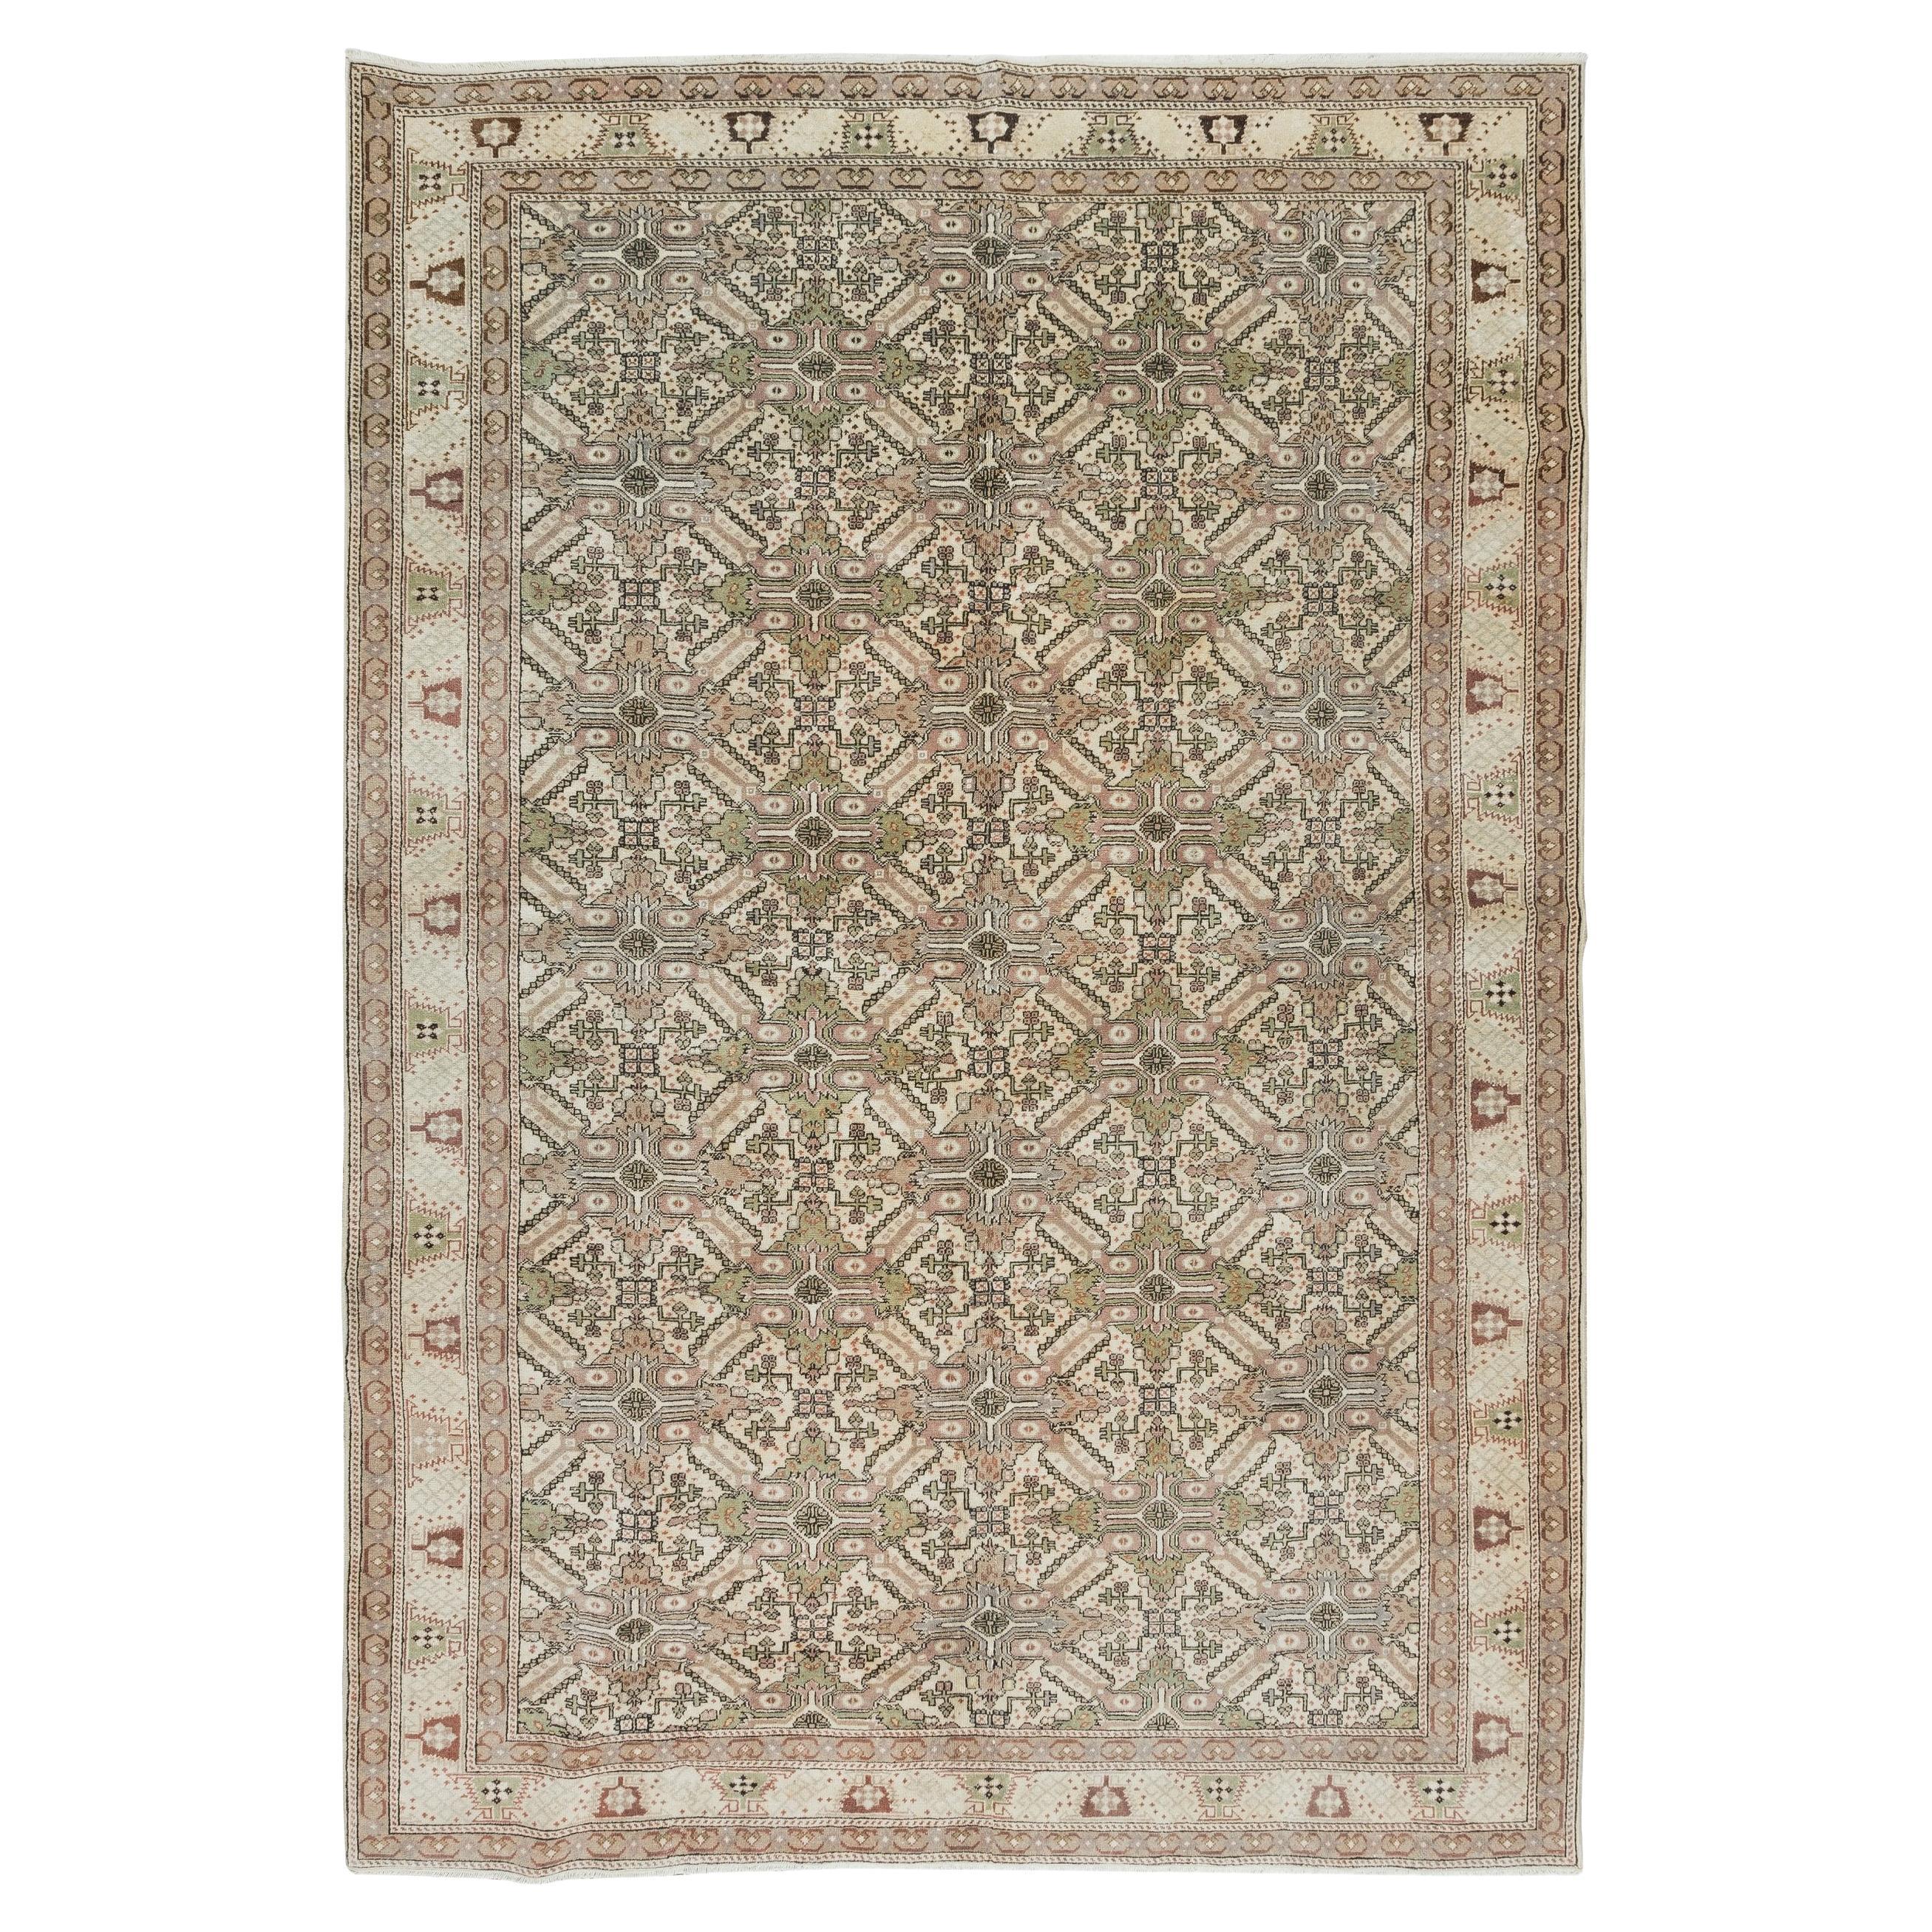 Handmade Turkish Area Rug, Vintage Floral Wool Carpet For Sale